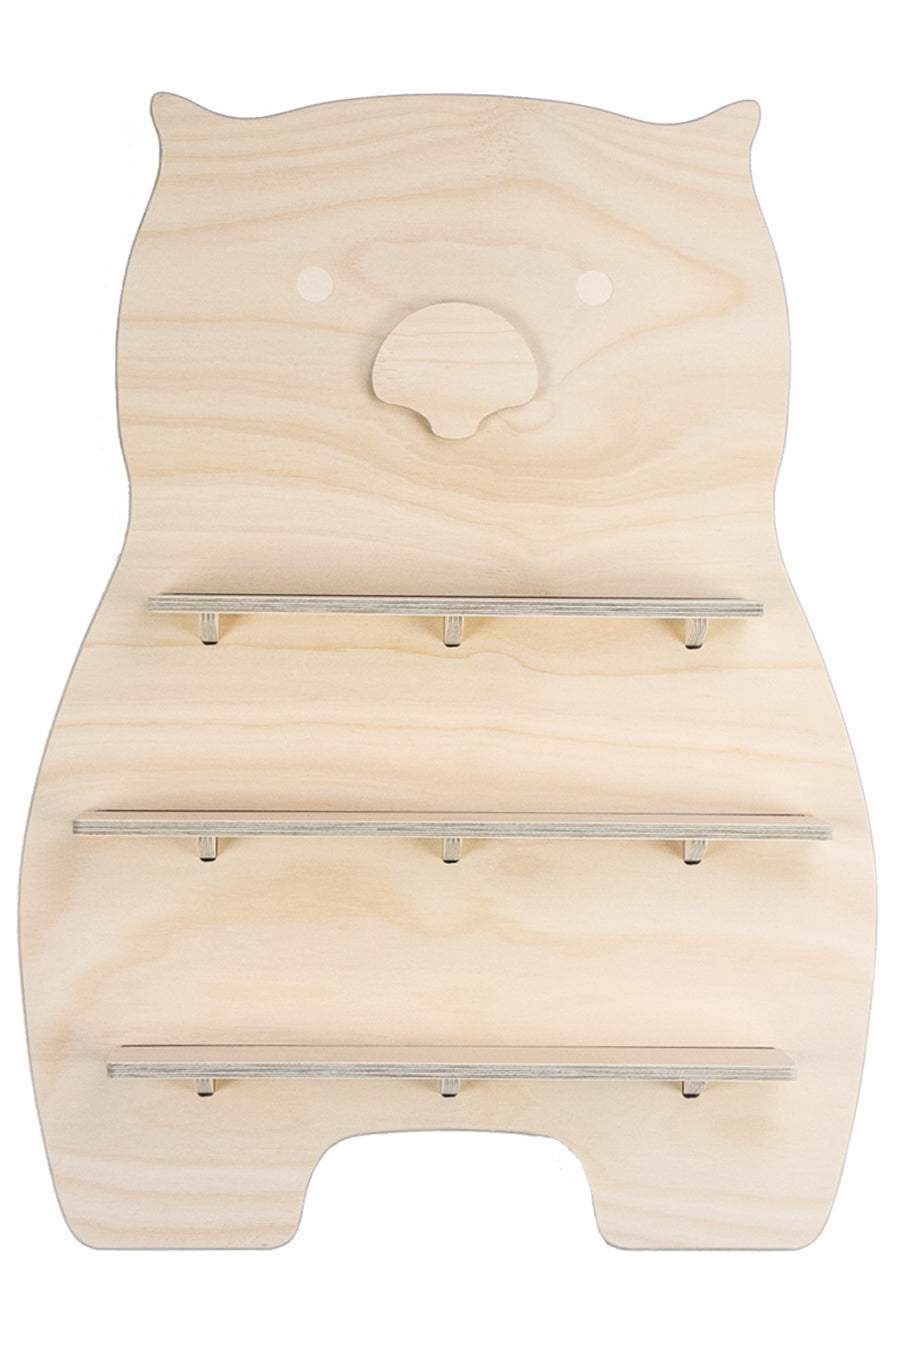 Wooden Wally Wombat Shelf – Animal Shaped Shelves